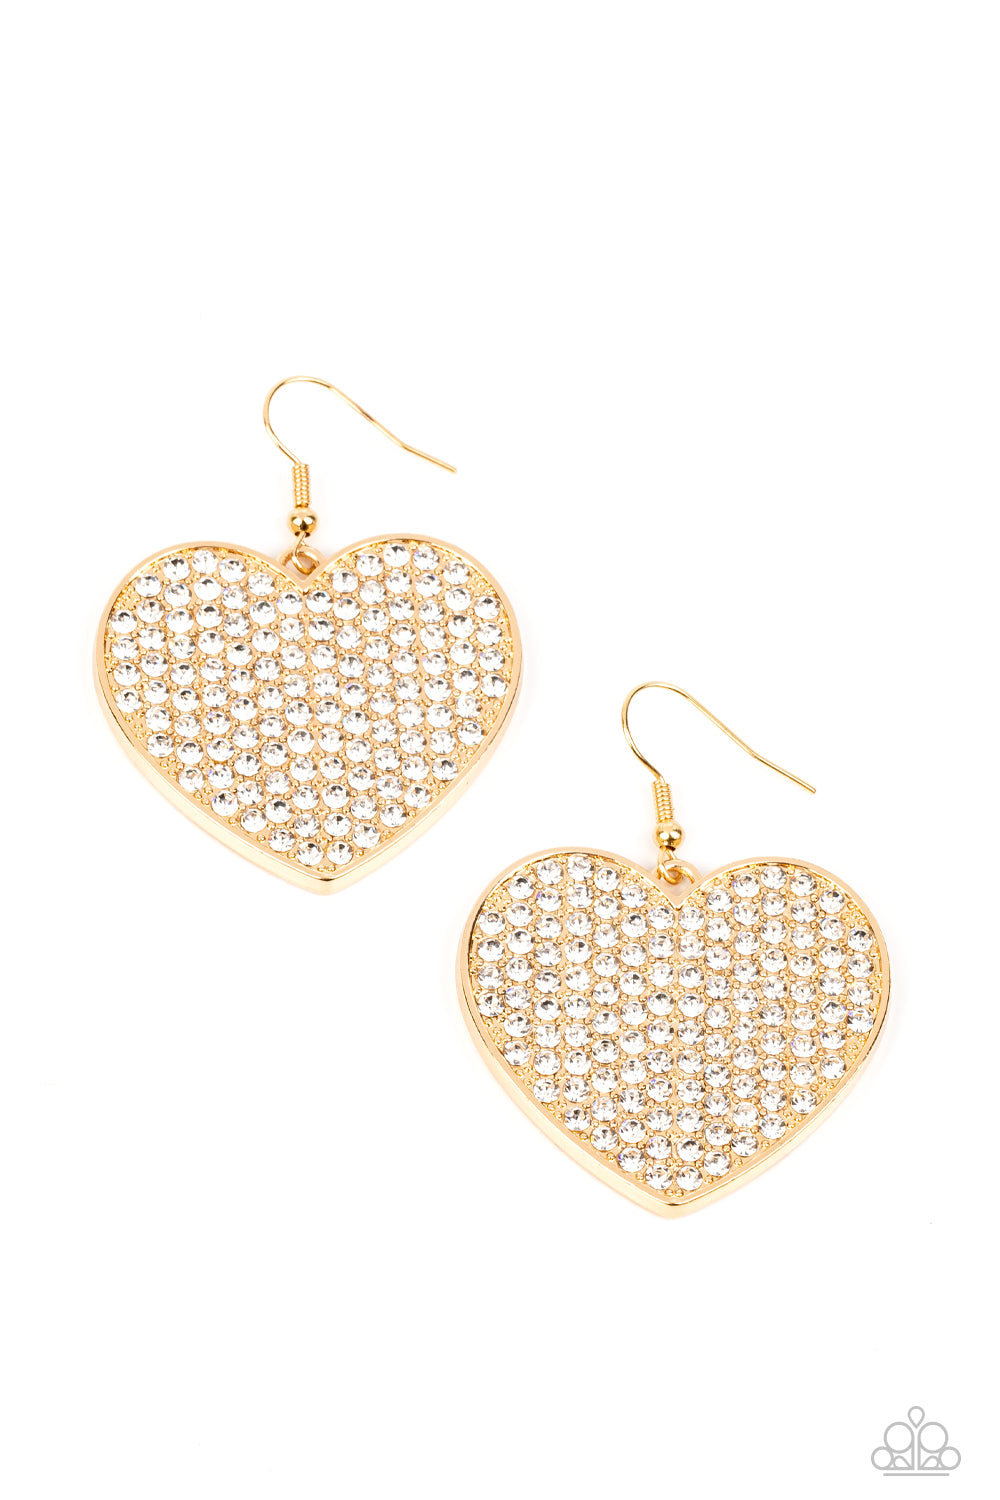 Paparazzi Accessories - Romantic Reign #E186 Bin - Gold Earrings